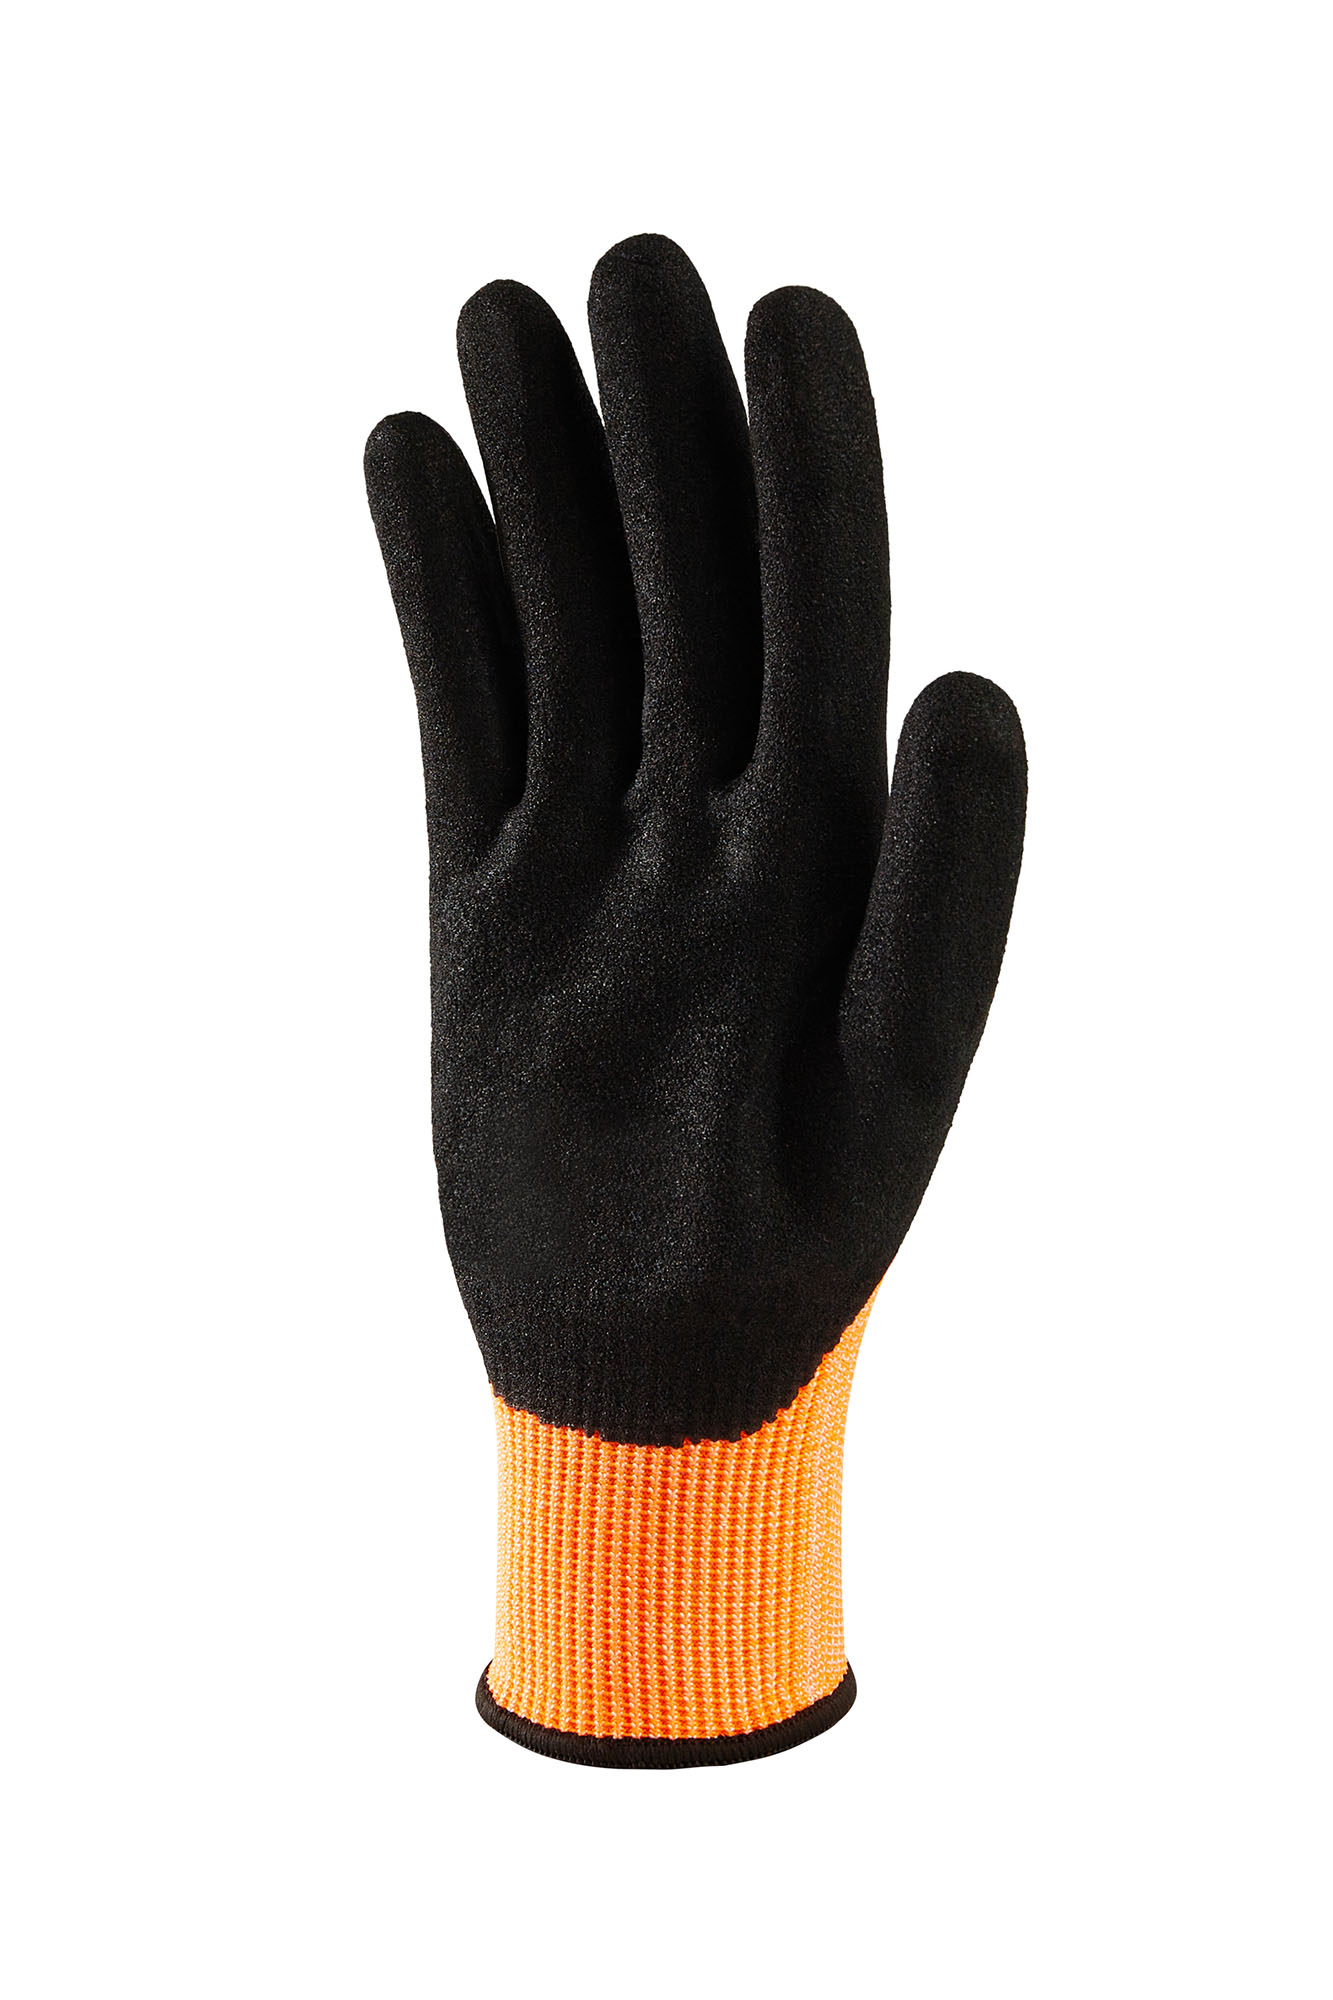 KIWI Cut Resistant Impact Gloves - 1 PAIR - Radians RWG603